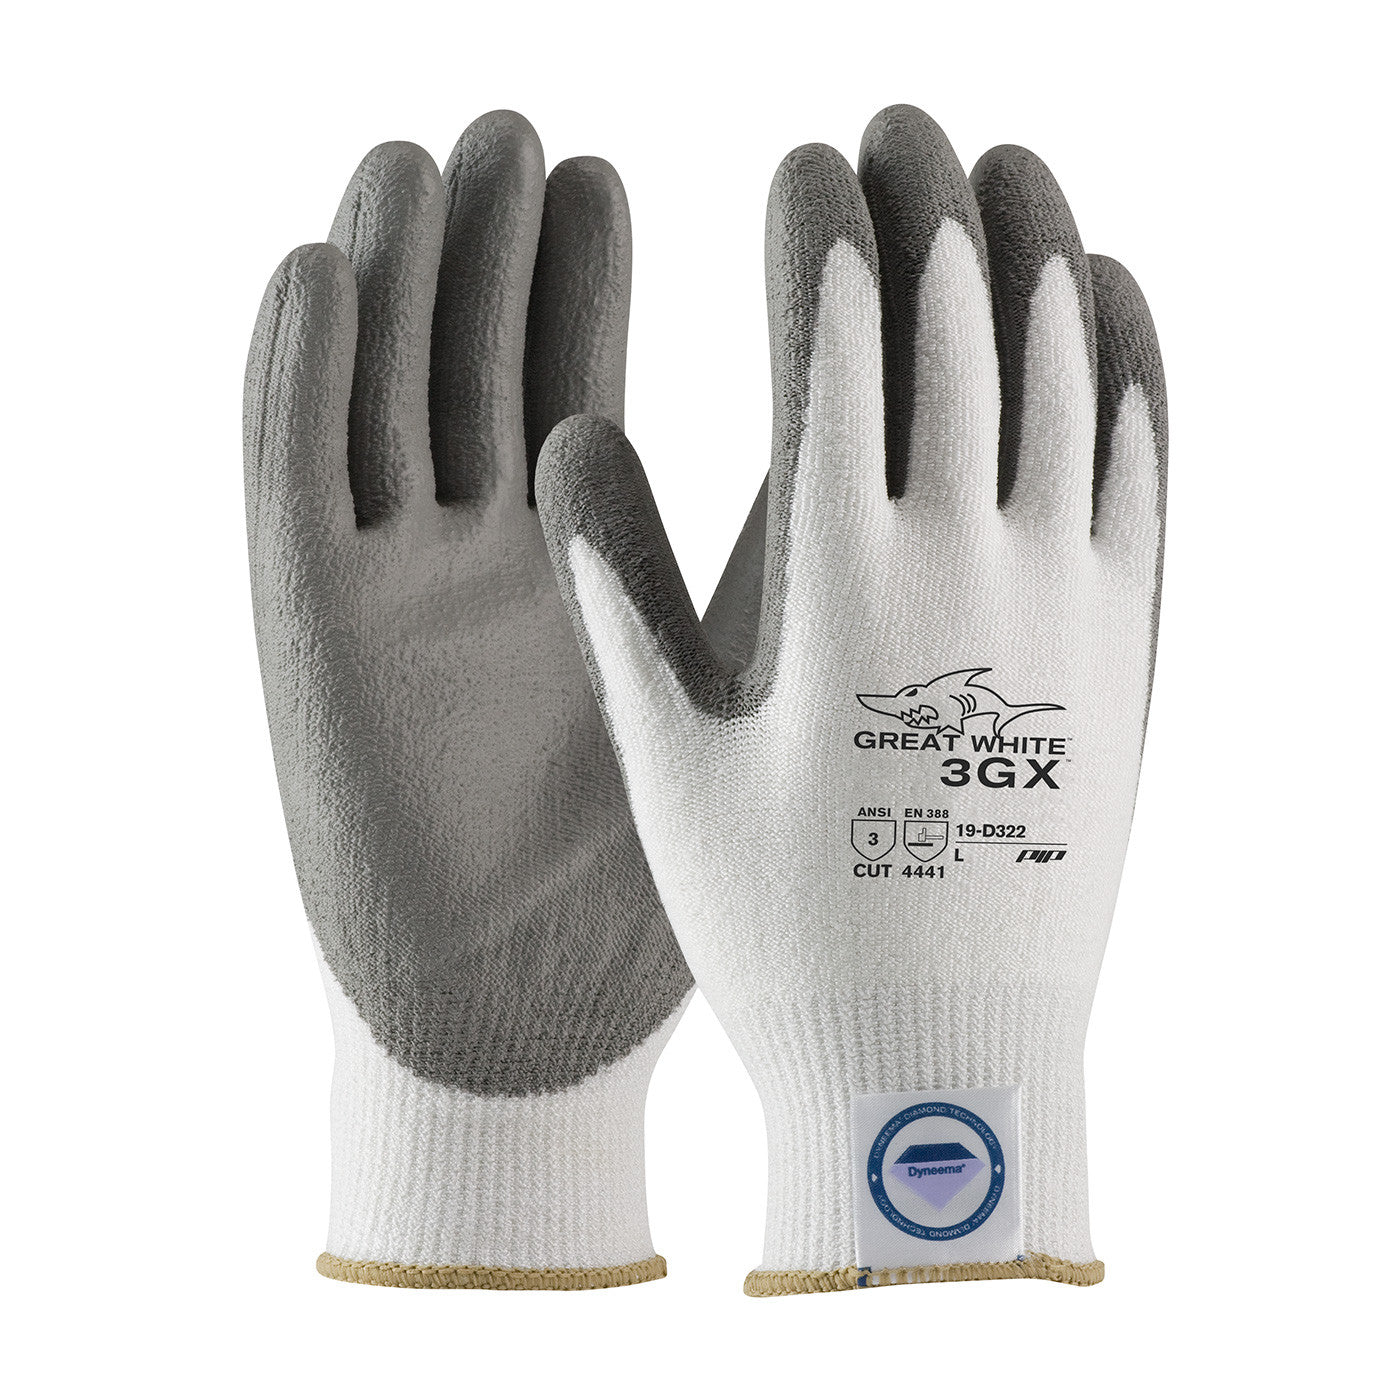 MaxiFlex Cut Men's Medium Green ANSI 2 Abraision Resistant Nitrile-Coated  Work Gloves